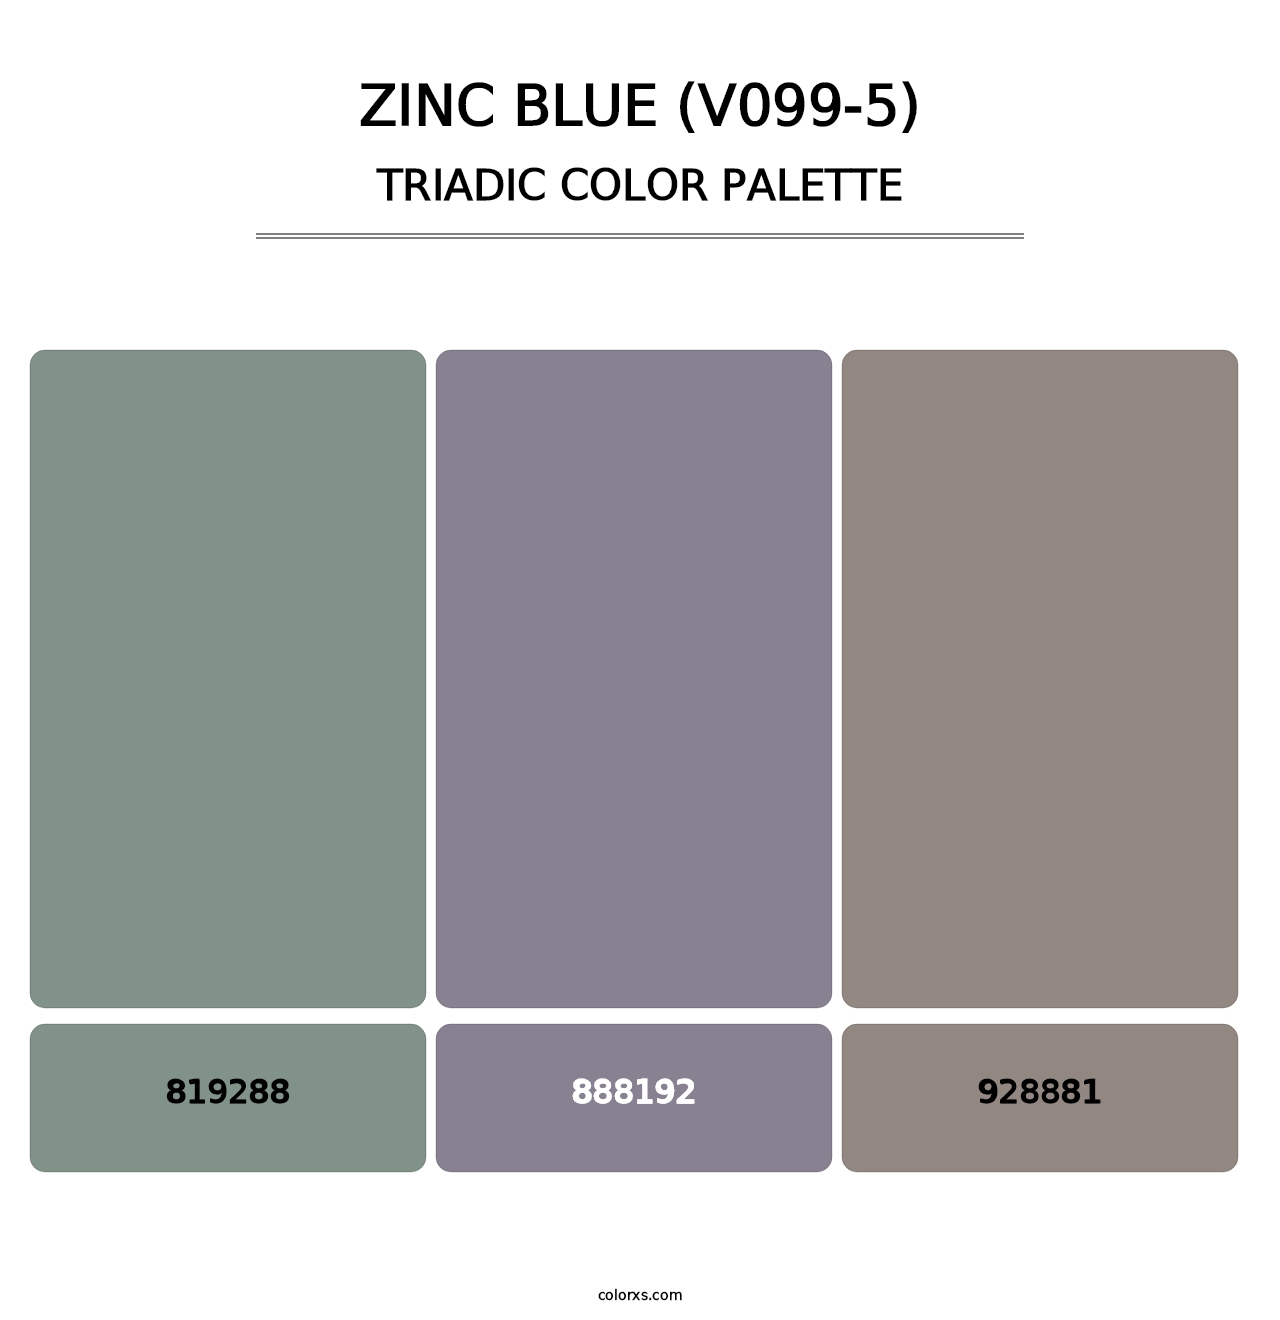 Zinc Blue (V099-5) - Triadic Color Palette